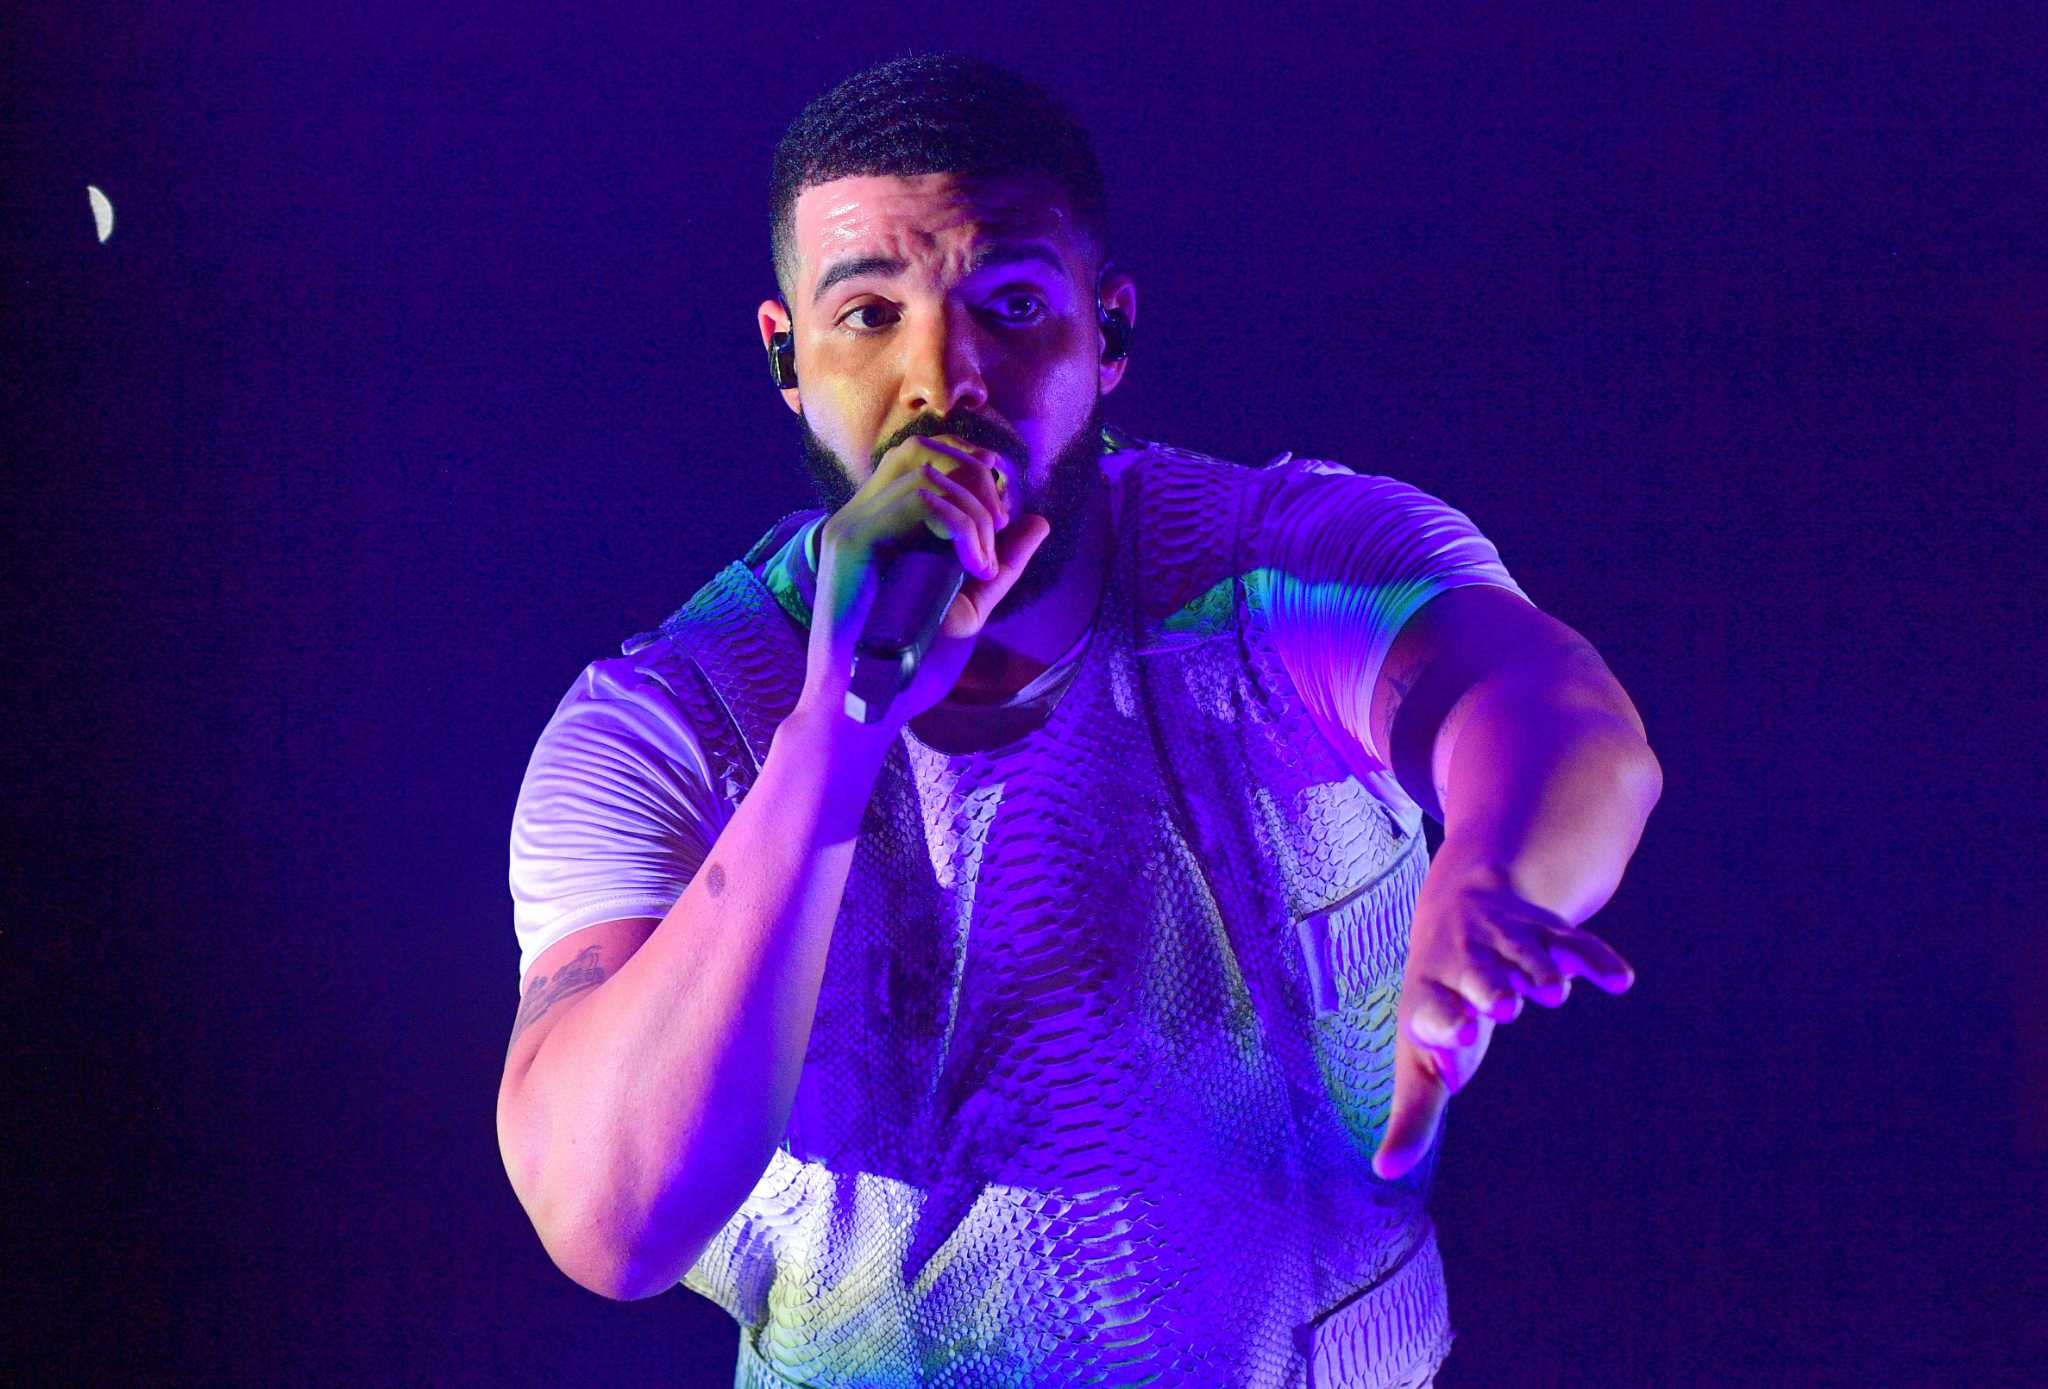 How did Drake wind up wearing Danbury Trashers gear? 'He was